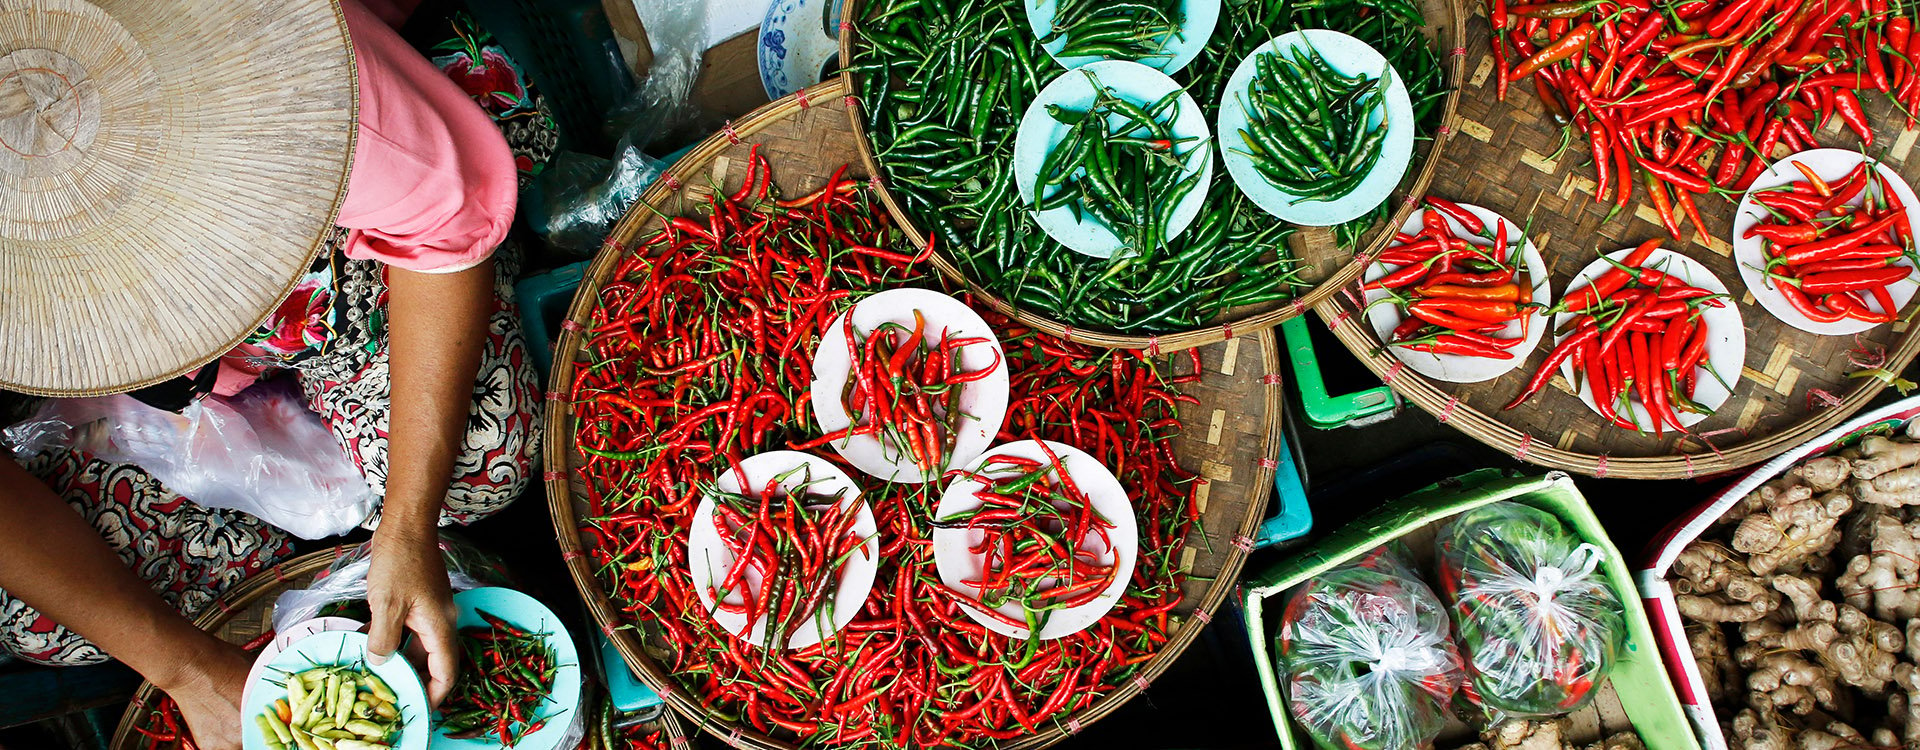 Basket of chilies Vietnam